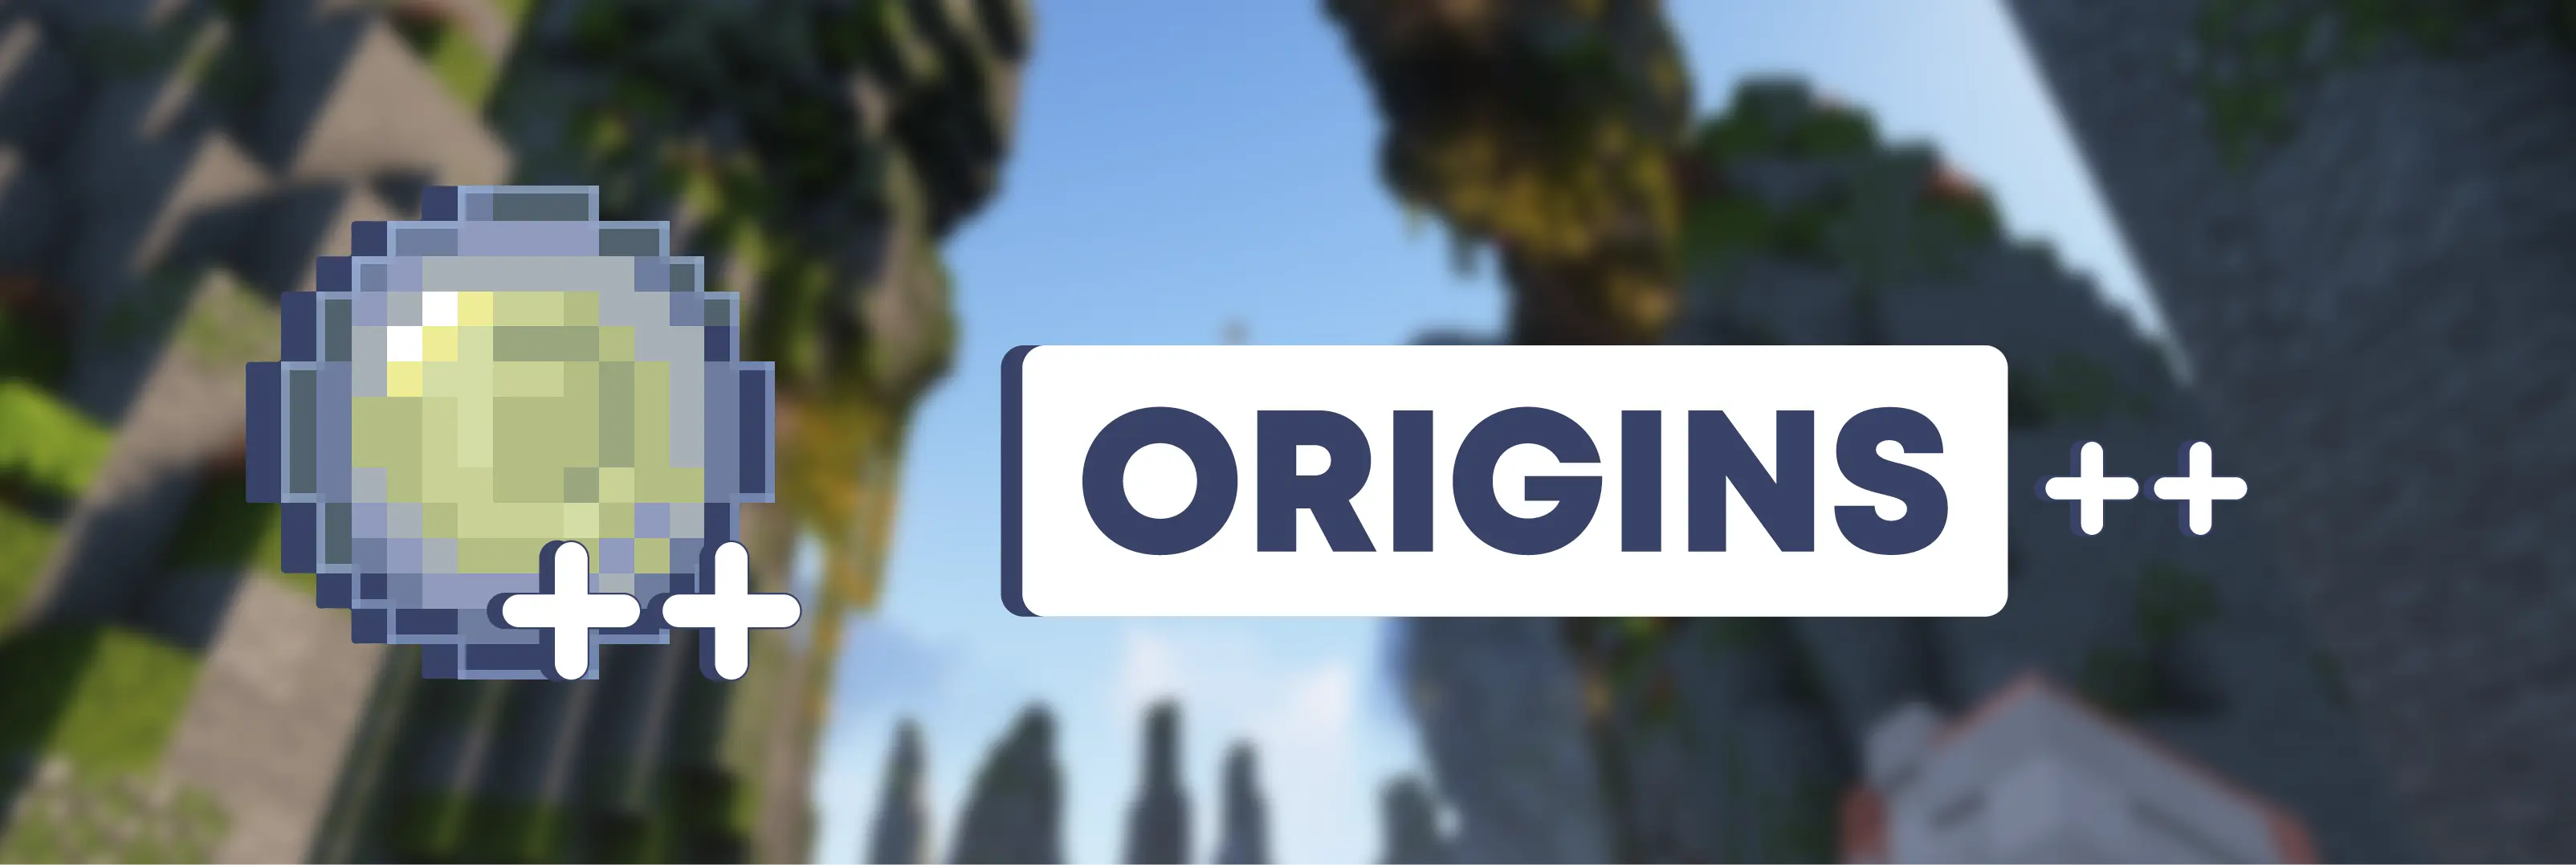 Origins - Endermite - Minecraft Mods - CurseForge